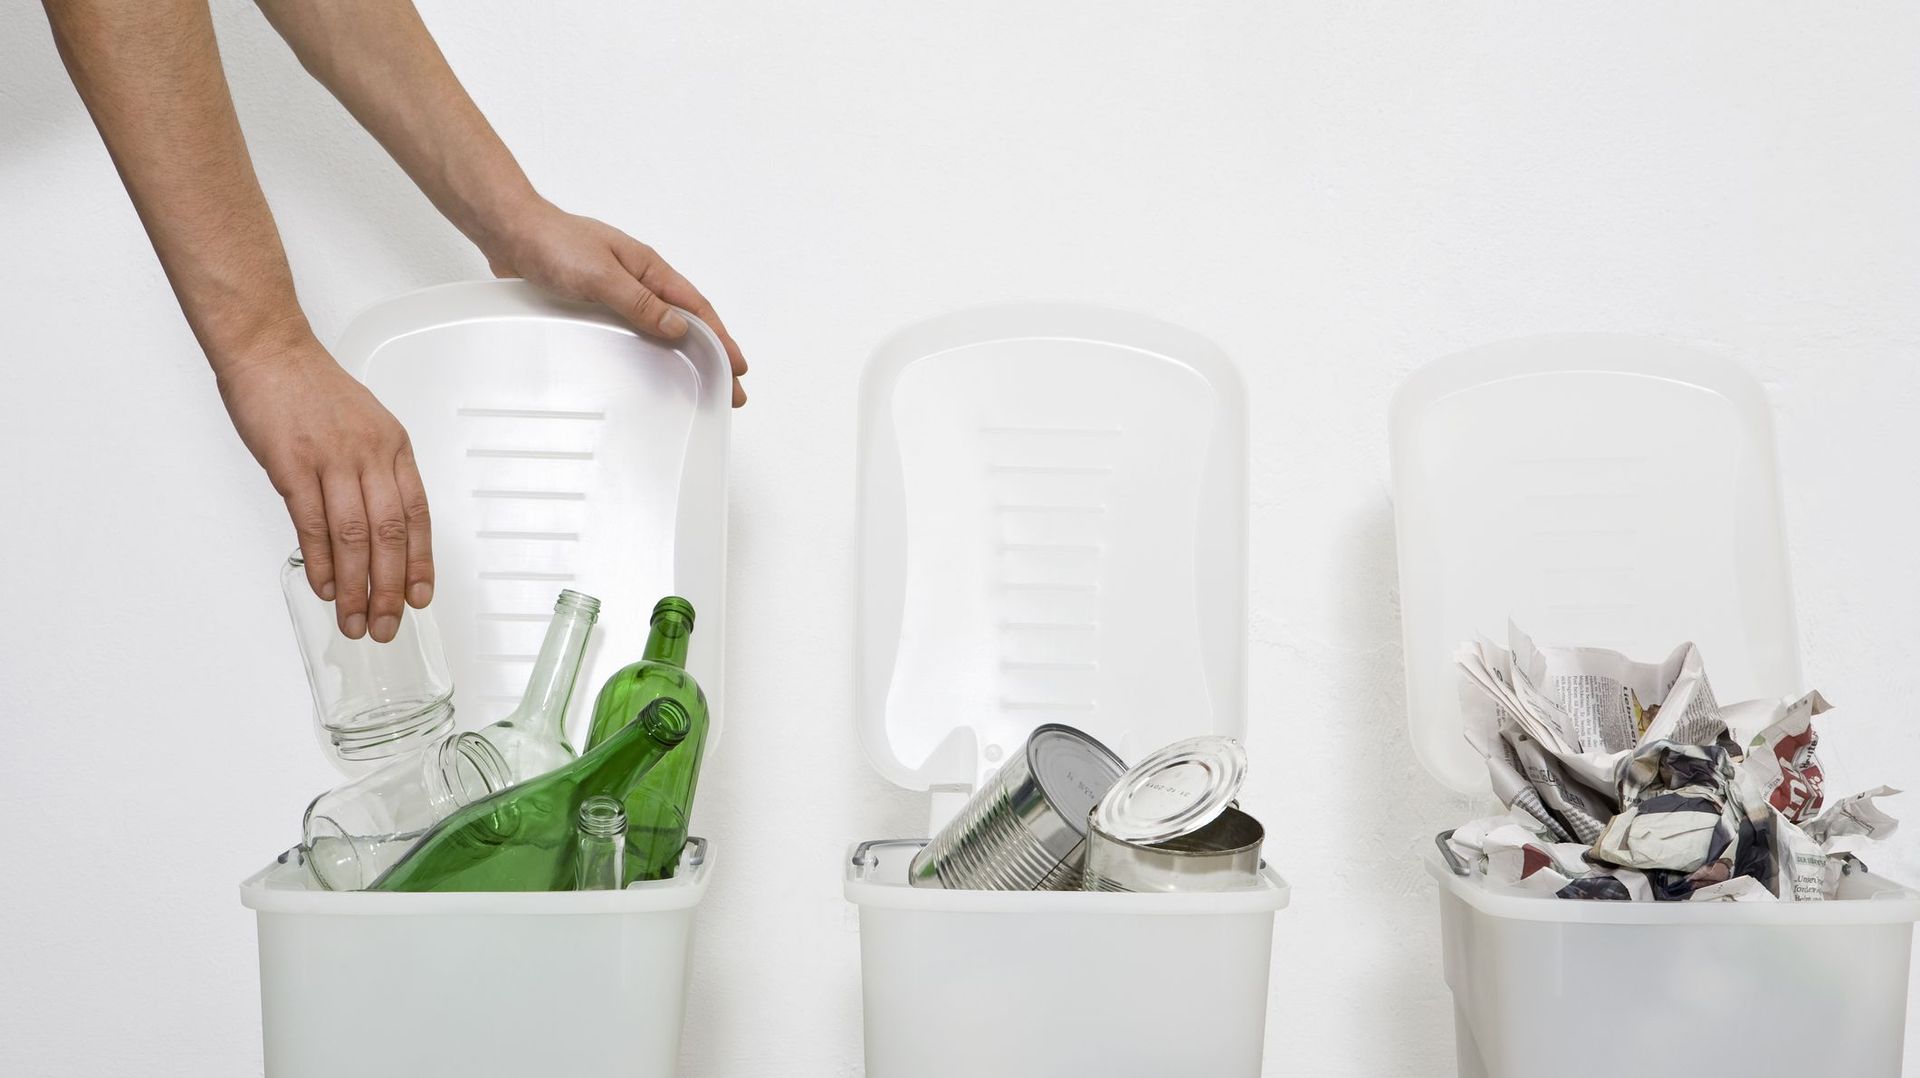 A human hand putting a glass jar in a recycling bin